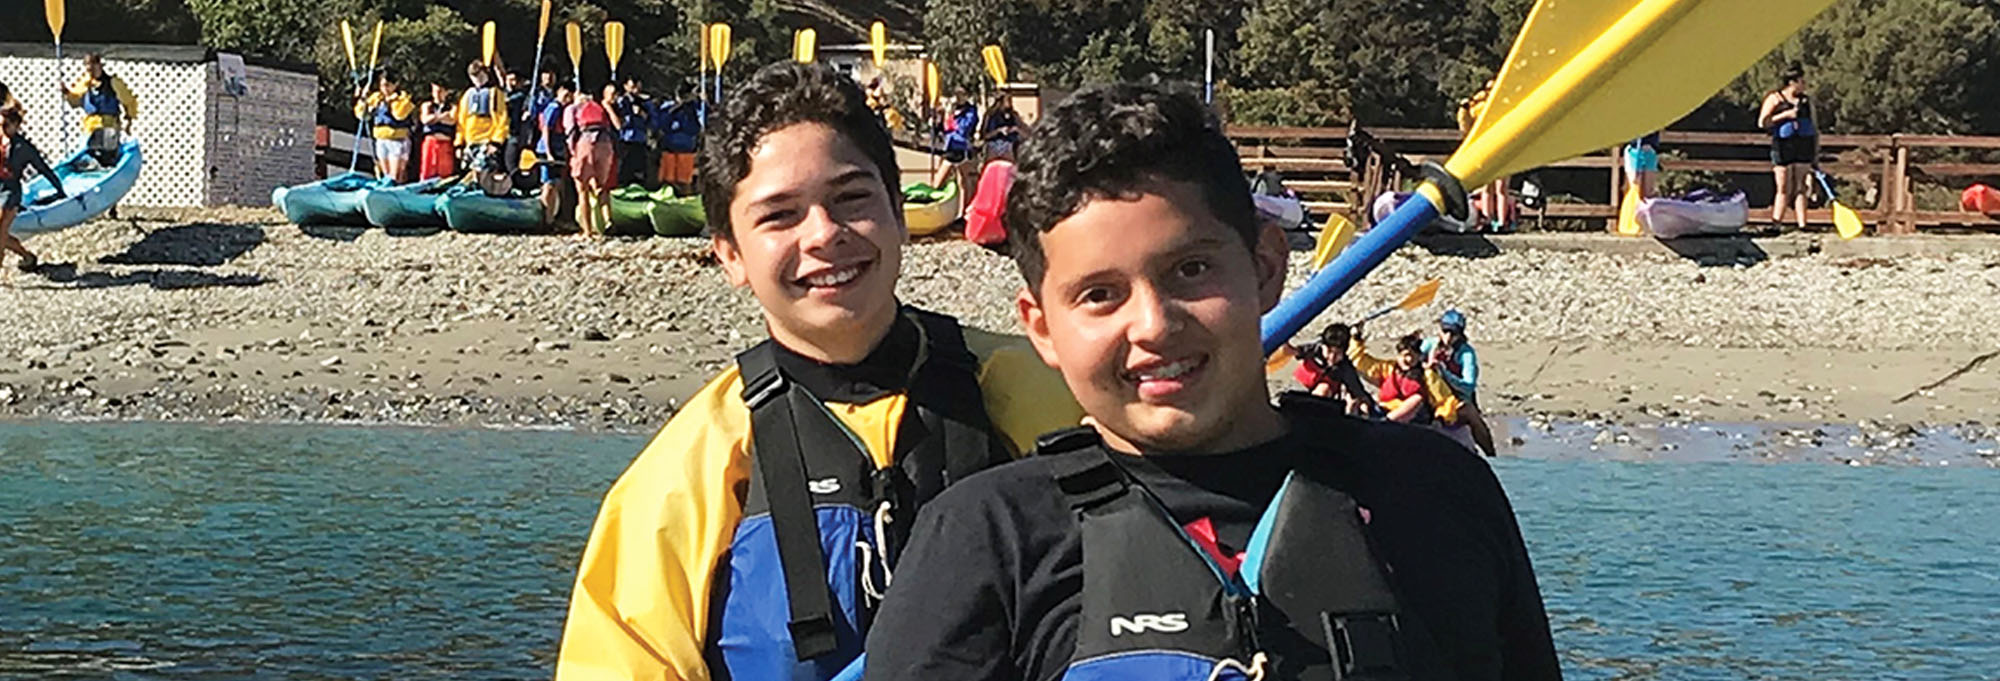 Two boy enjoying canoeing in Catalina